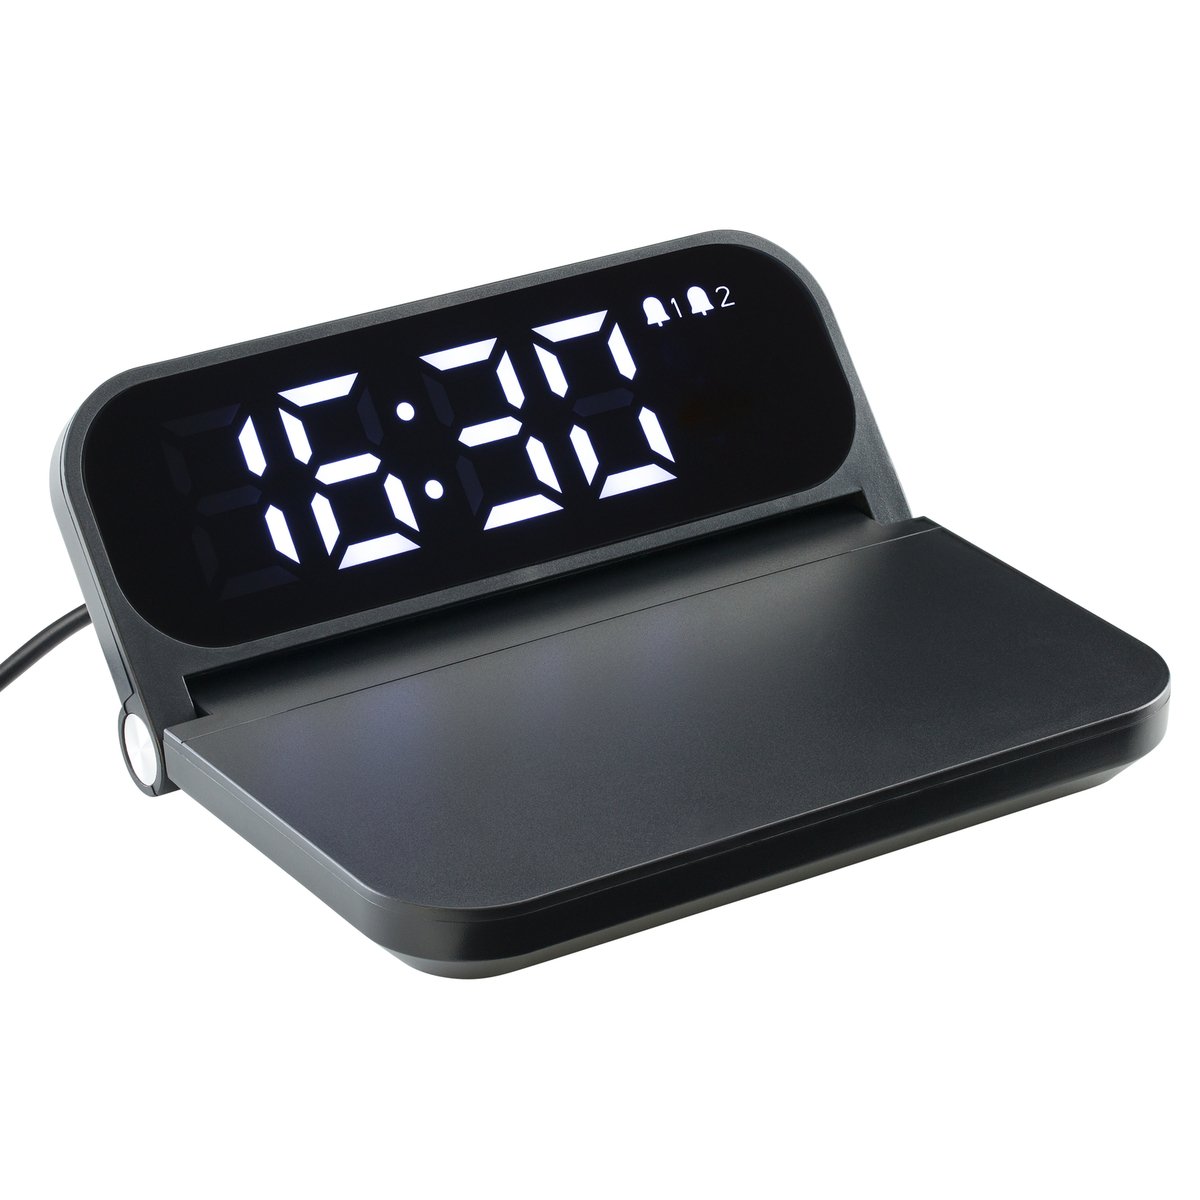 Fast Wireless Charger with alarm clock REEVES-BOXBURN black 15 Watt